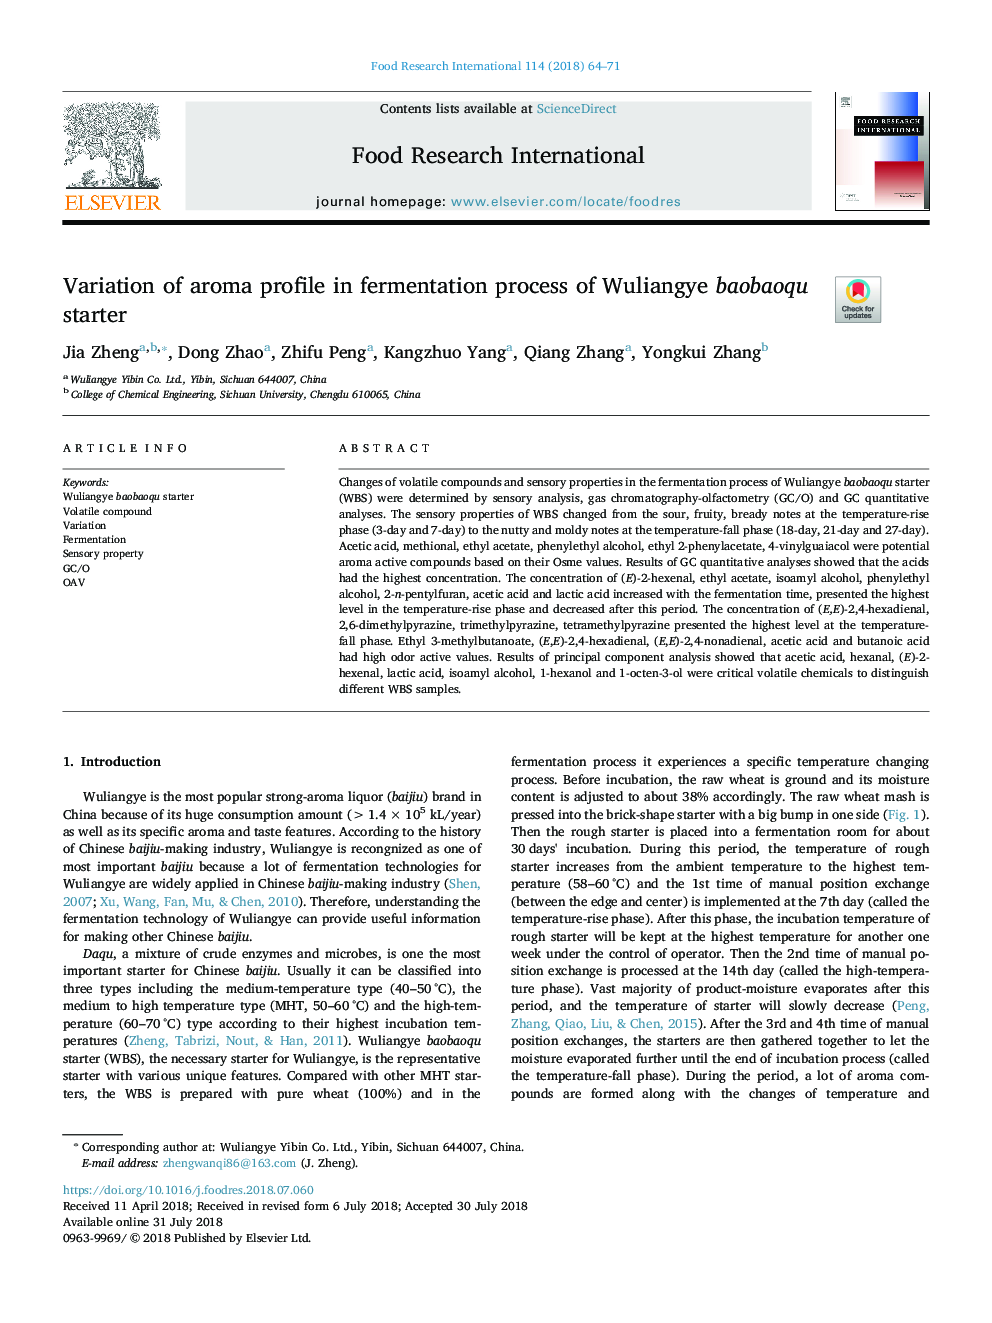 Variation of aroma profile in fermentation process of Wuliangye baobaoqu starter